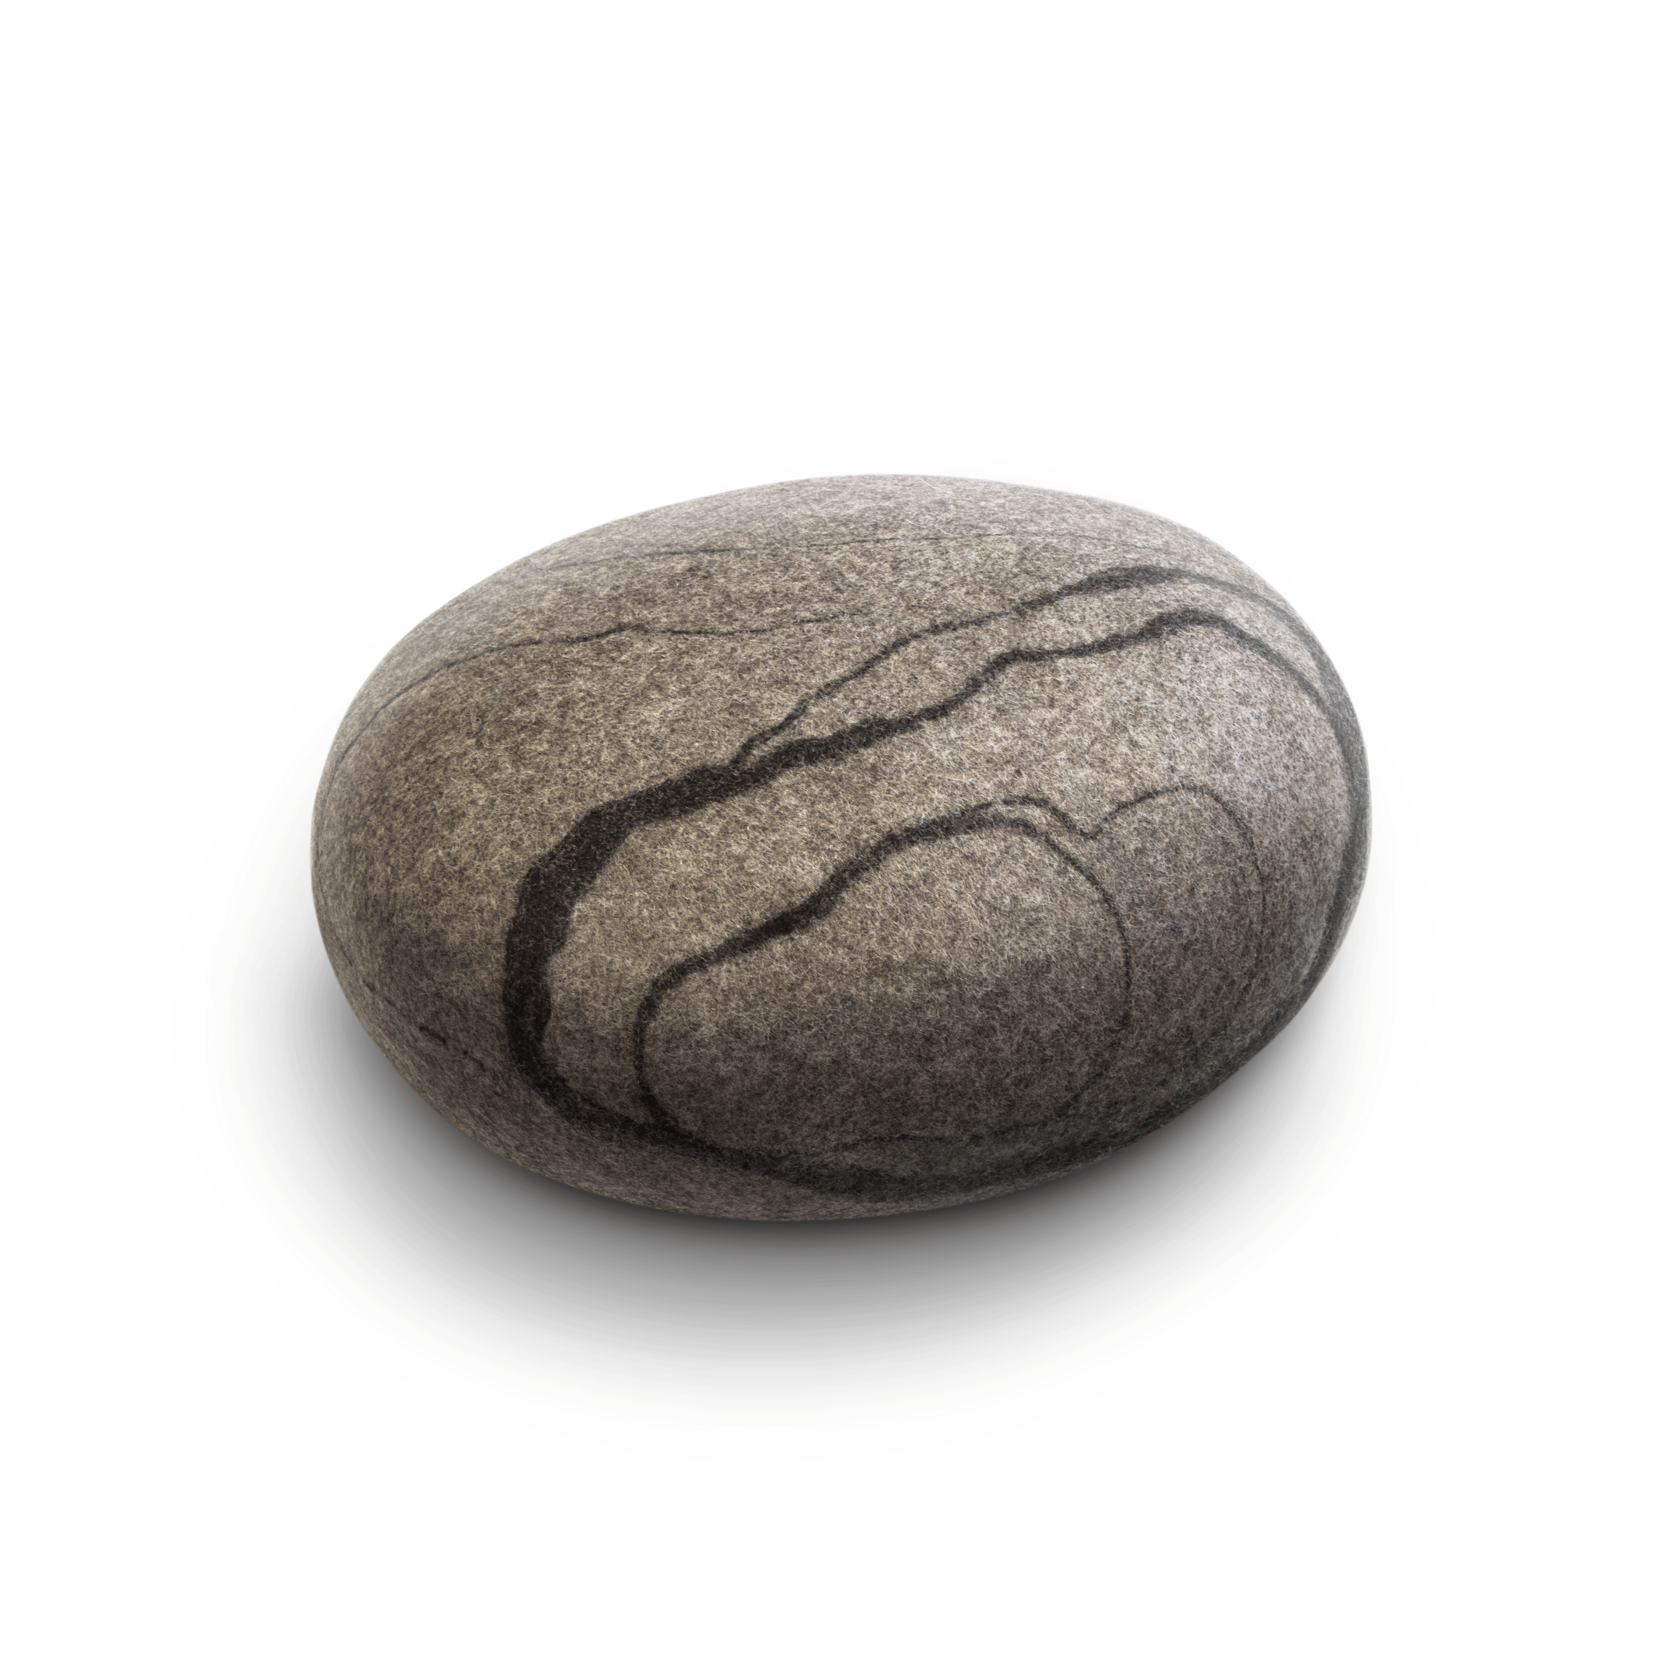 Felt stone. Katsu камни пуфы. Katsu камни валяные. Пуф галька. Пуф камень войлок.